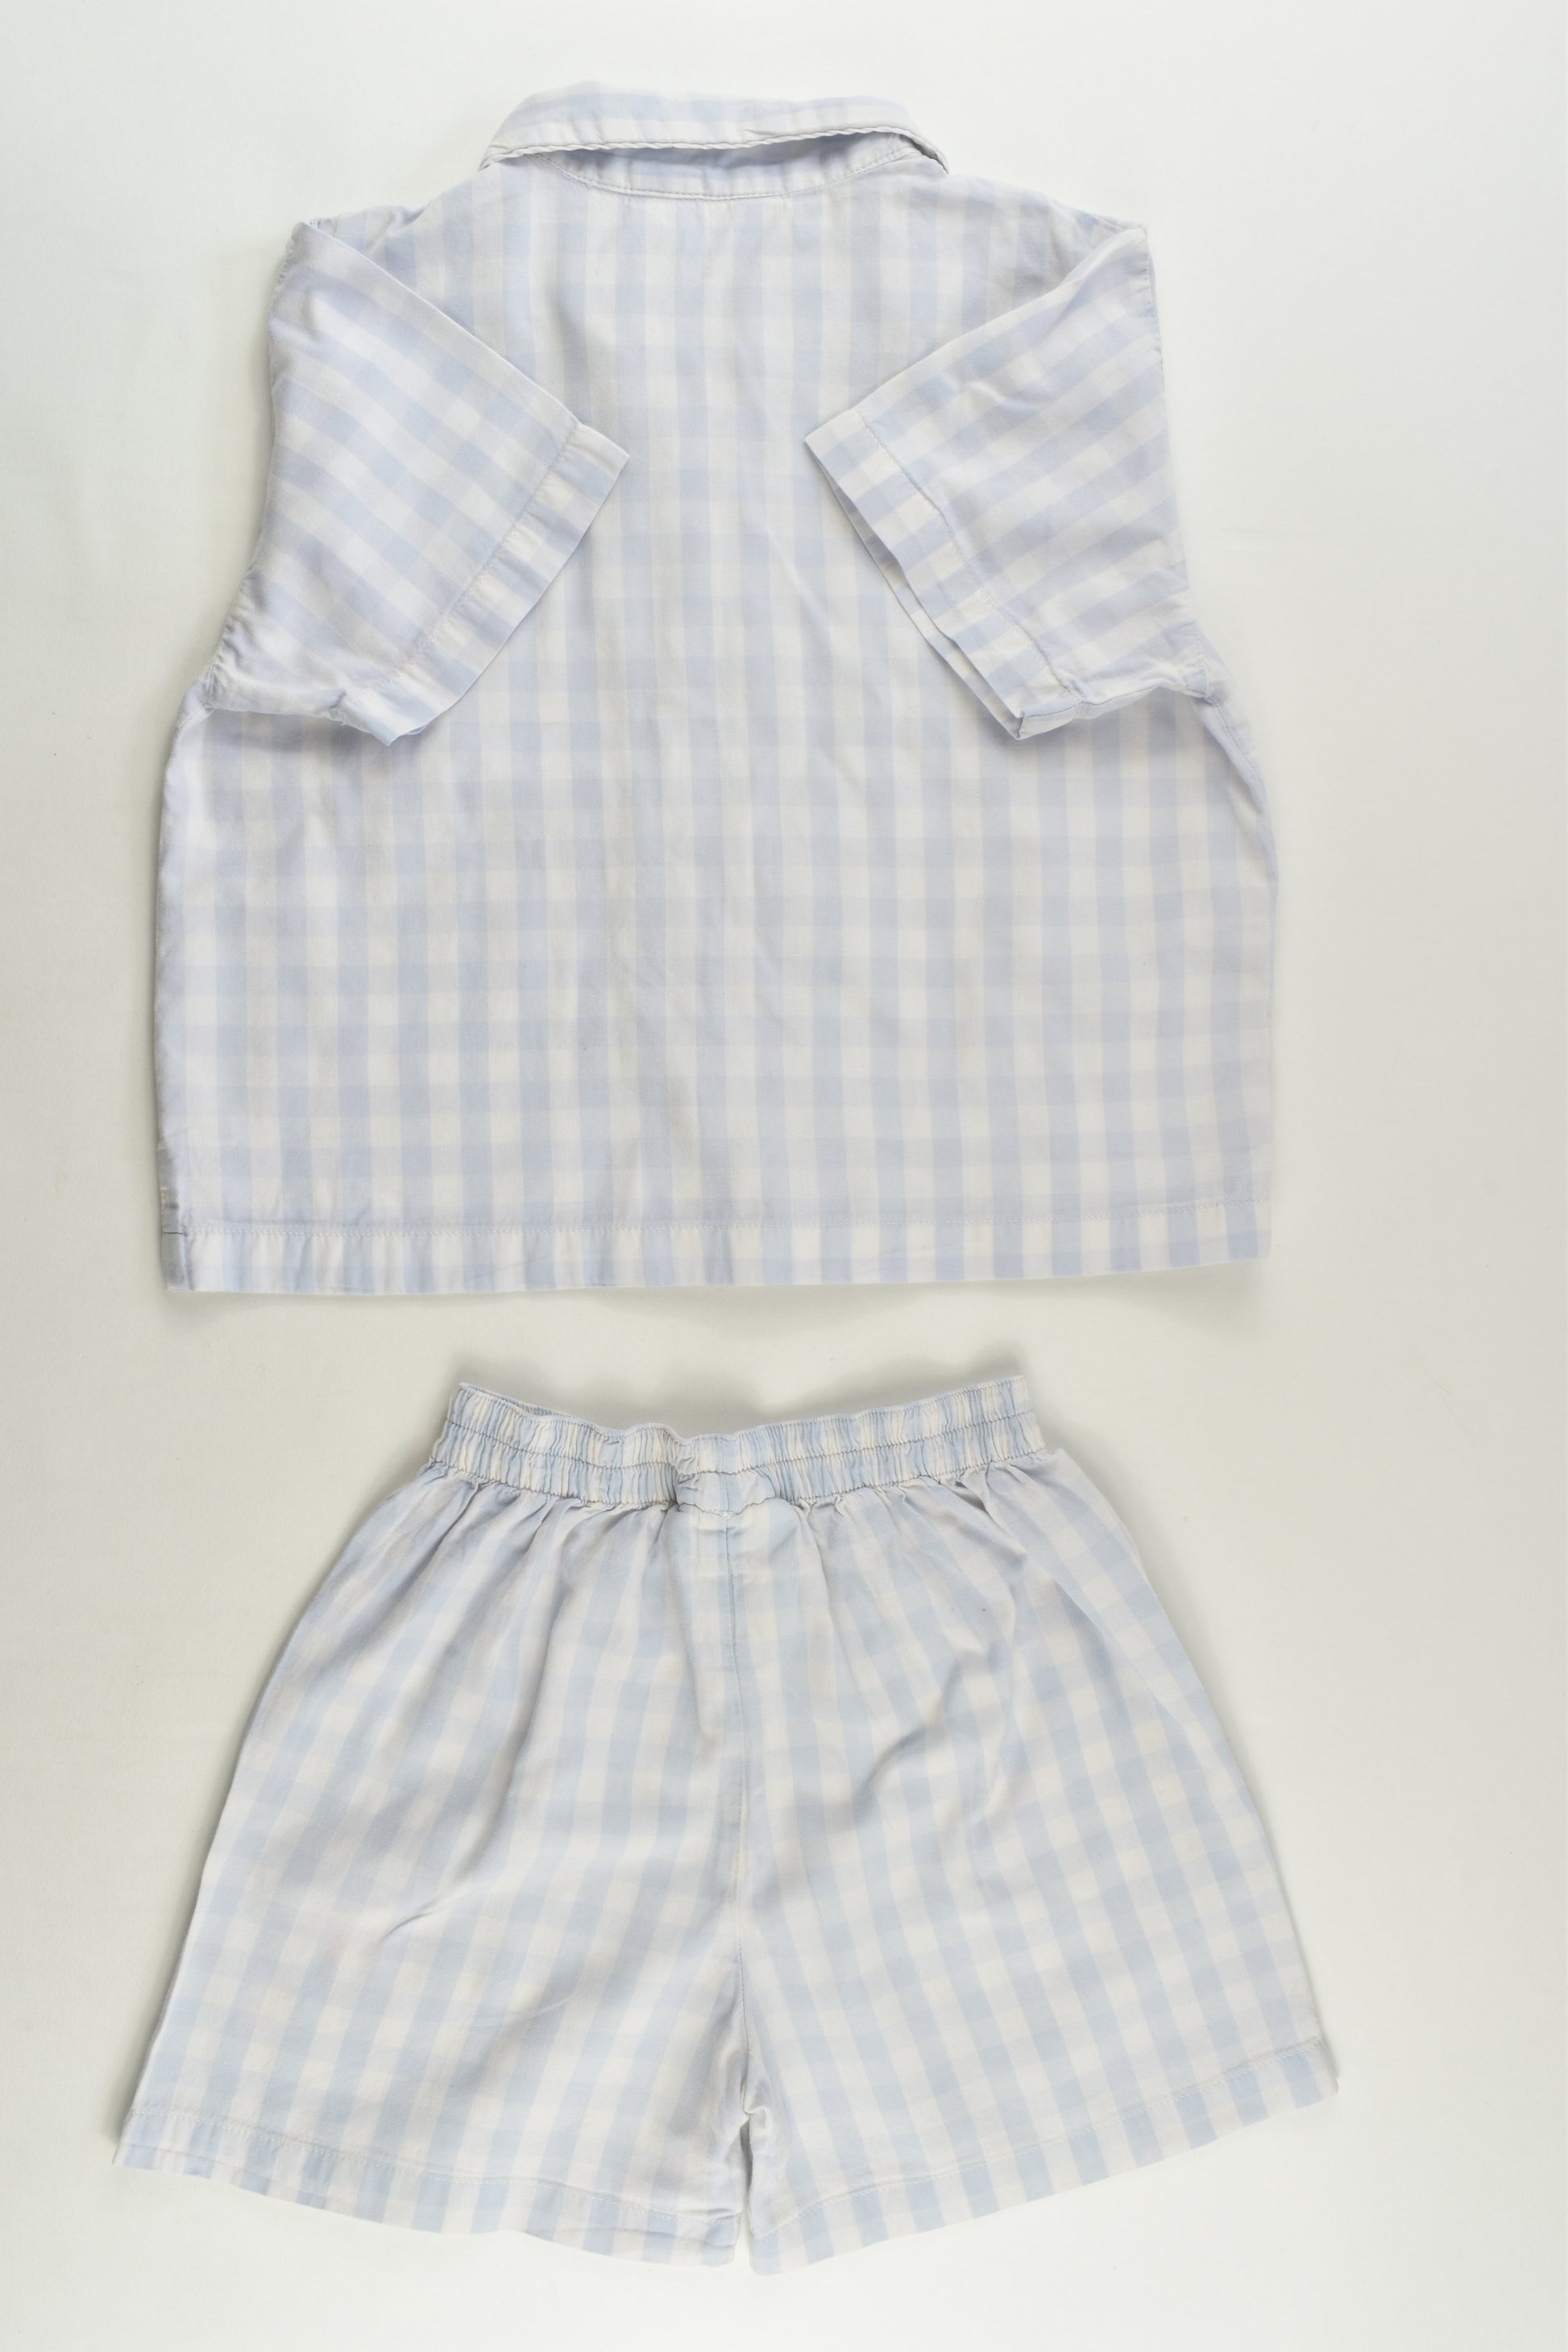 The Little White Company London Size 3-4 Short Pyjamas